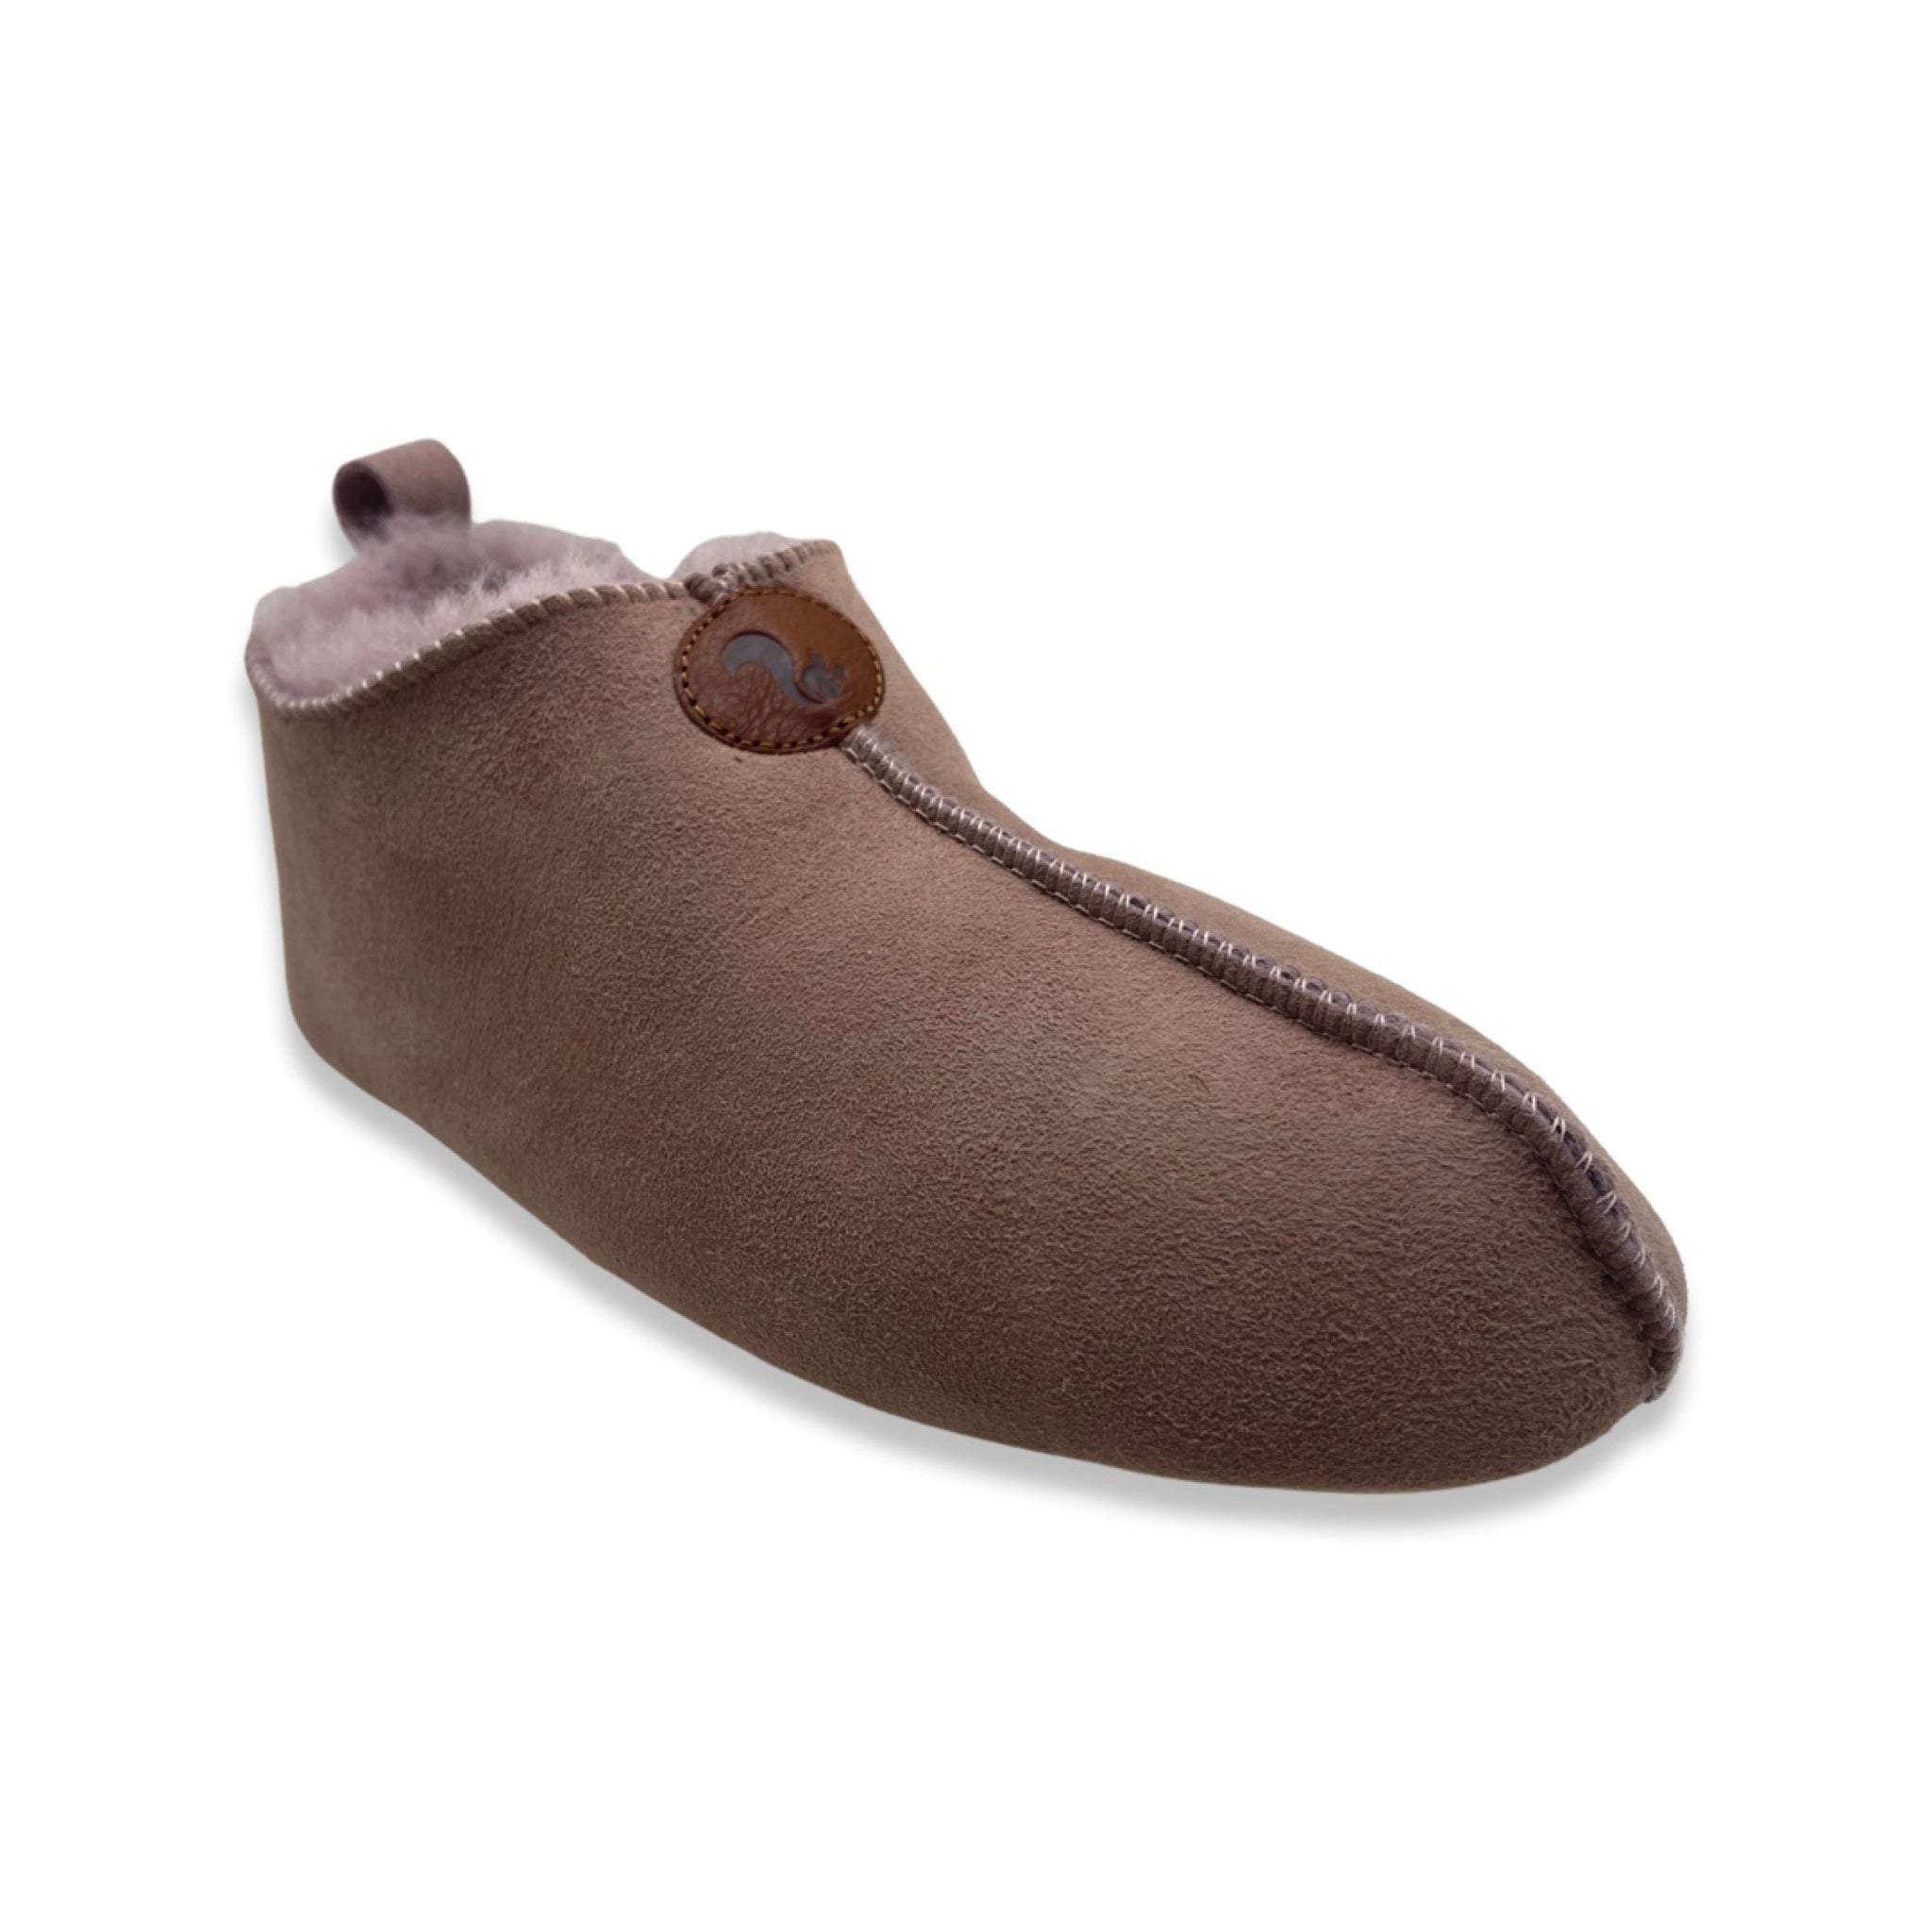 NAT 2 fodtøj thies 1856 ® Sheep Slipper Boot ny pink (W) bæredygtig mode etisk mode